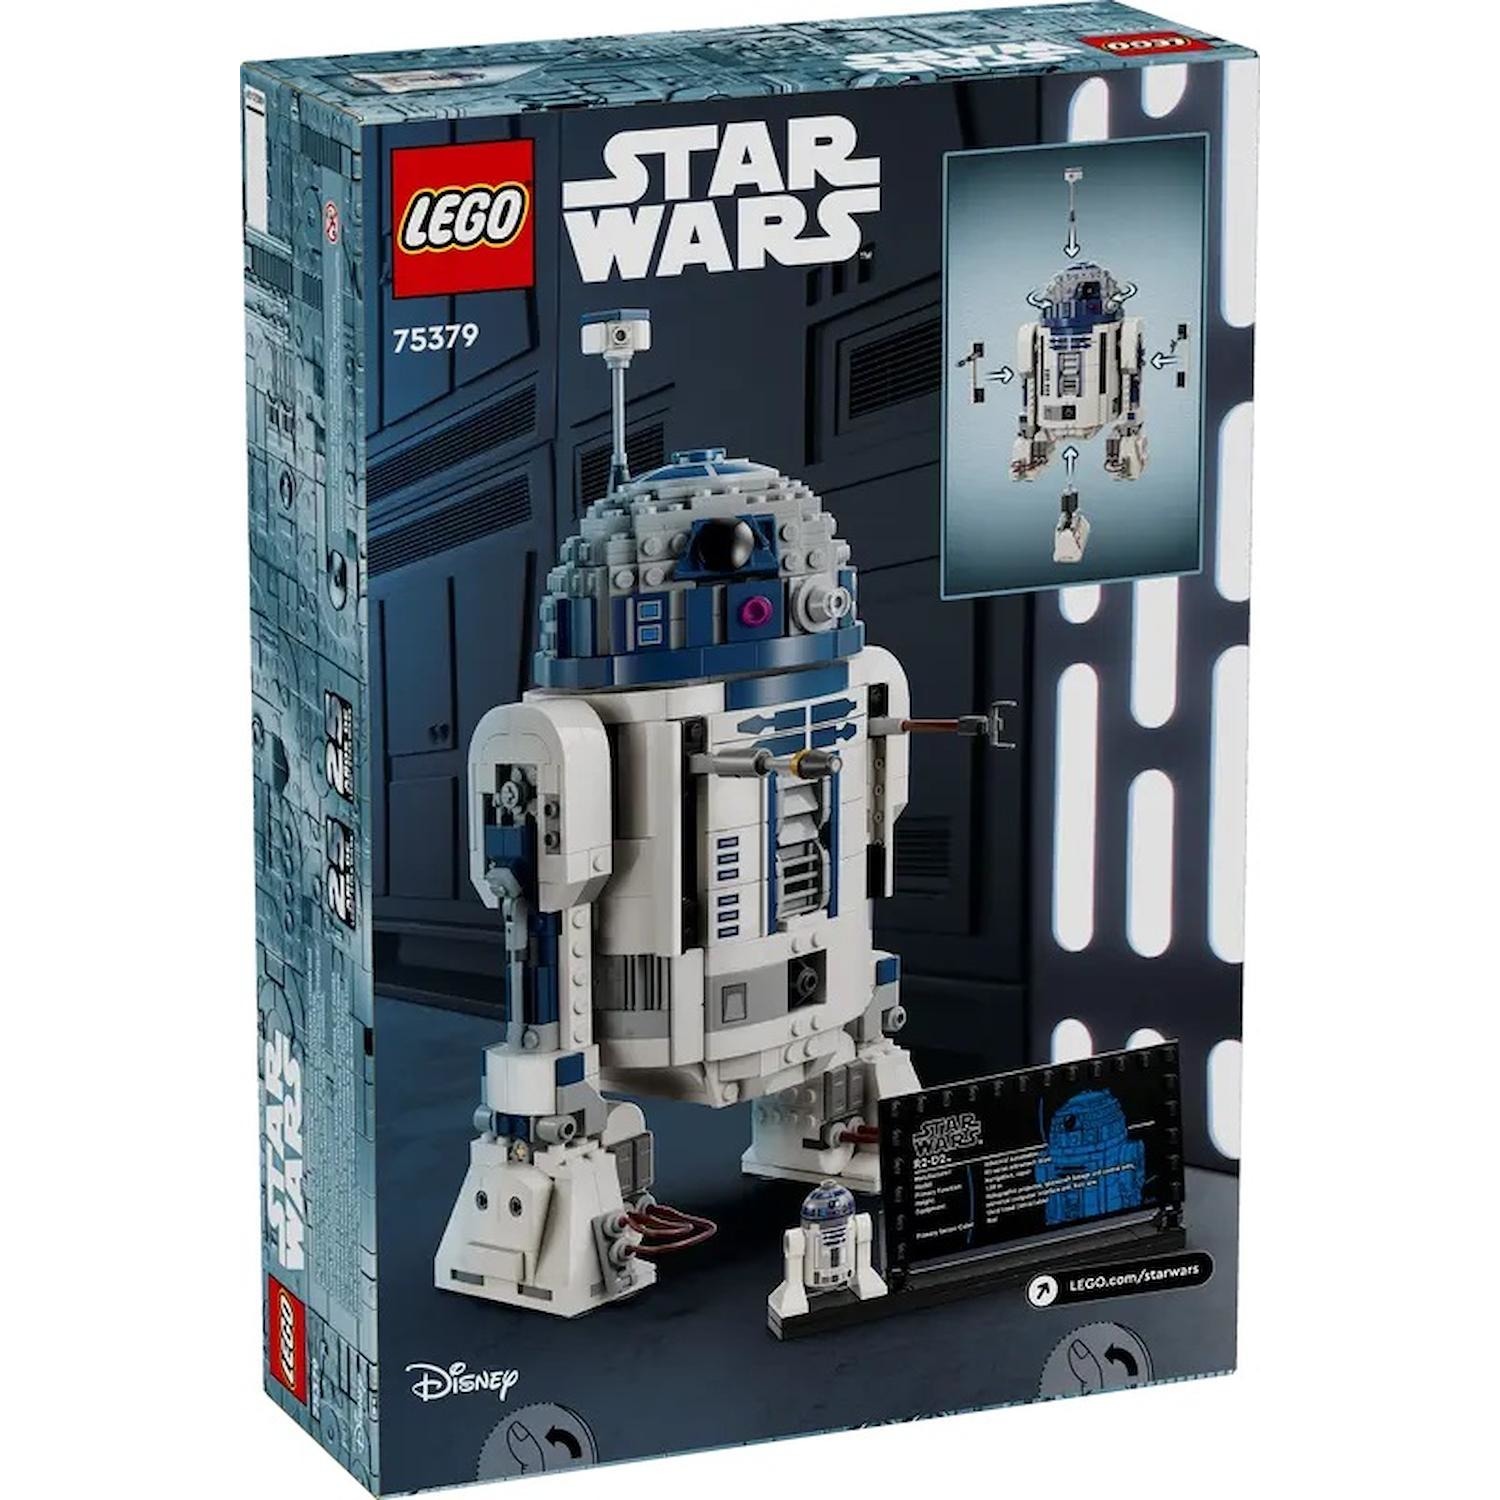 Immagine per Lego Star Wars R2-D2 da DIMOStore